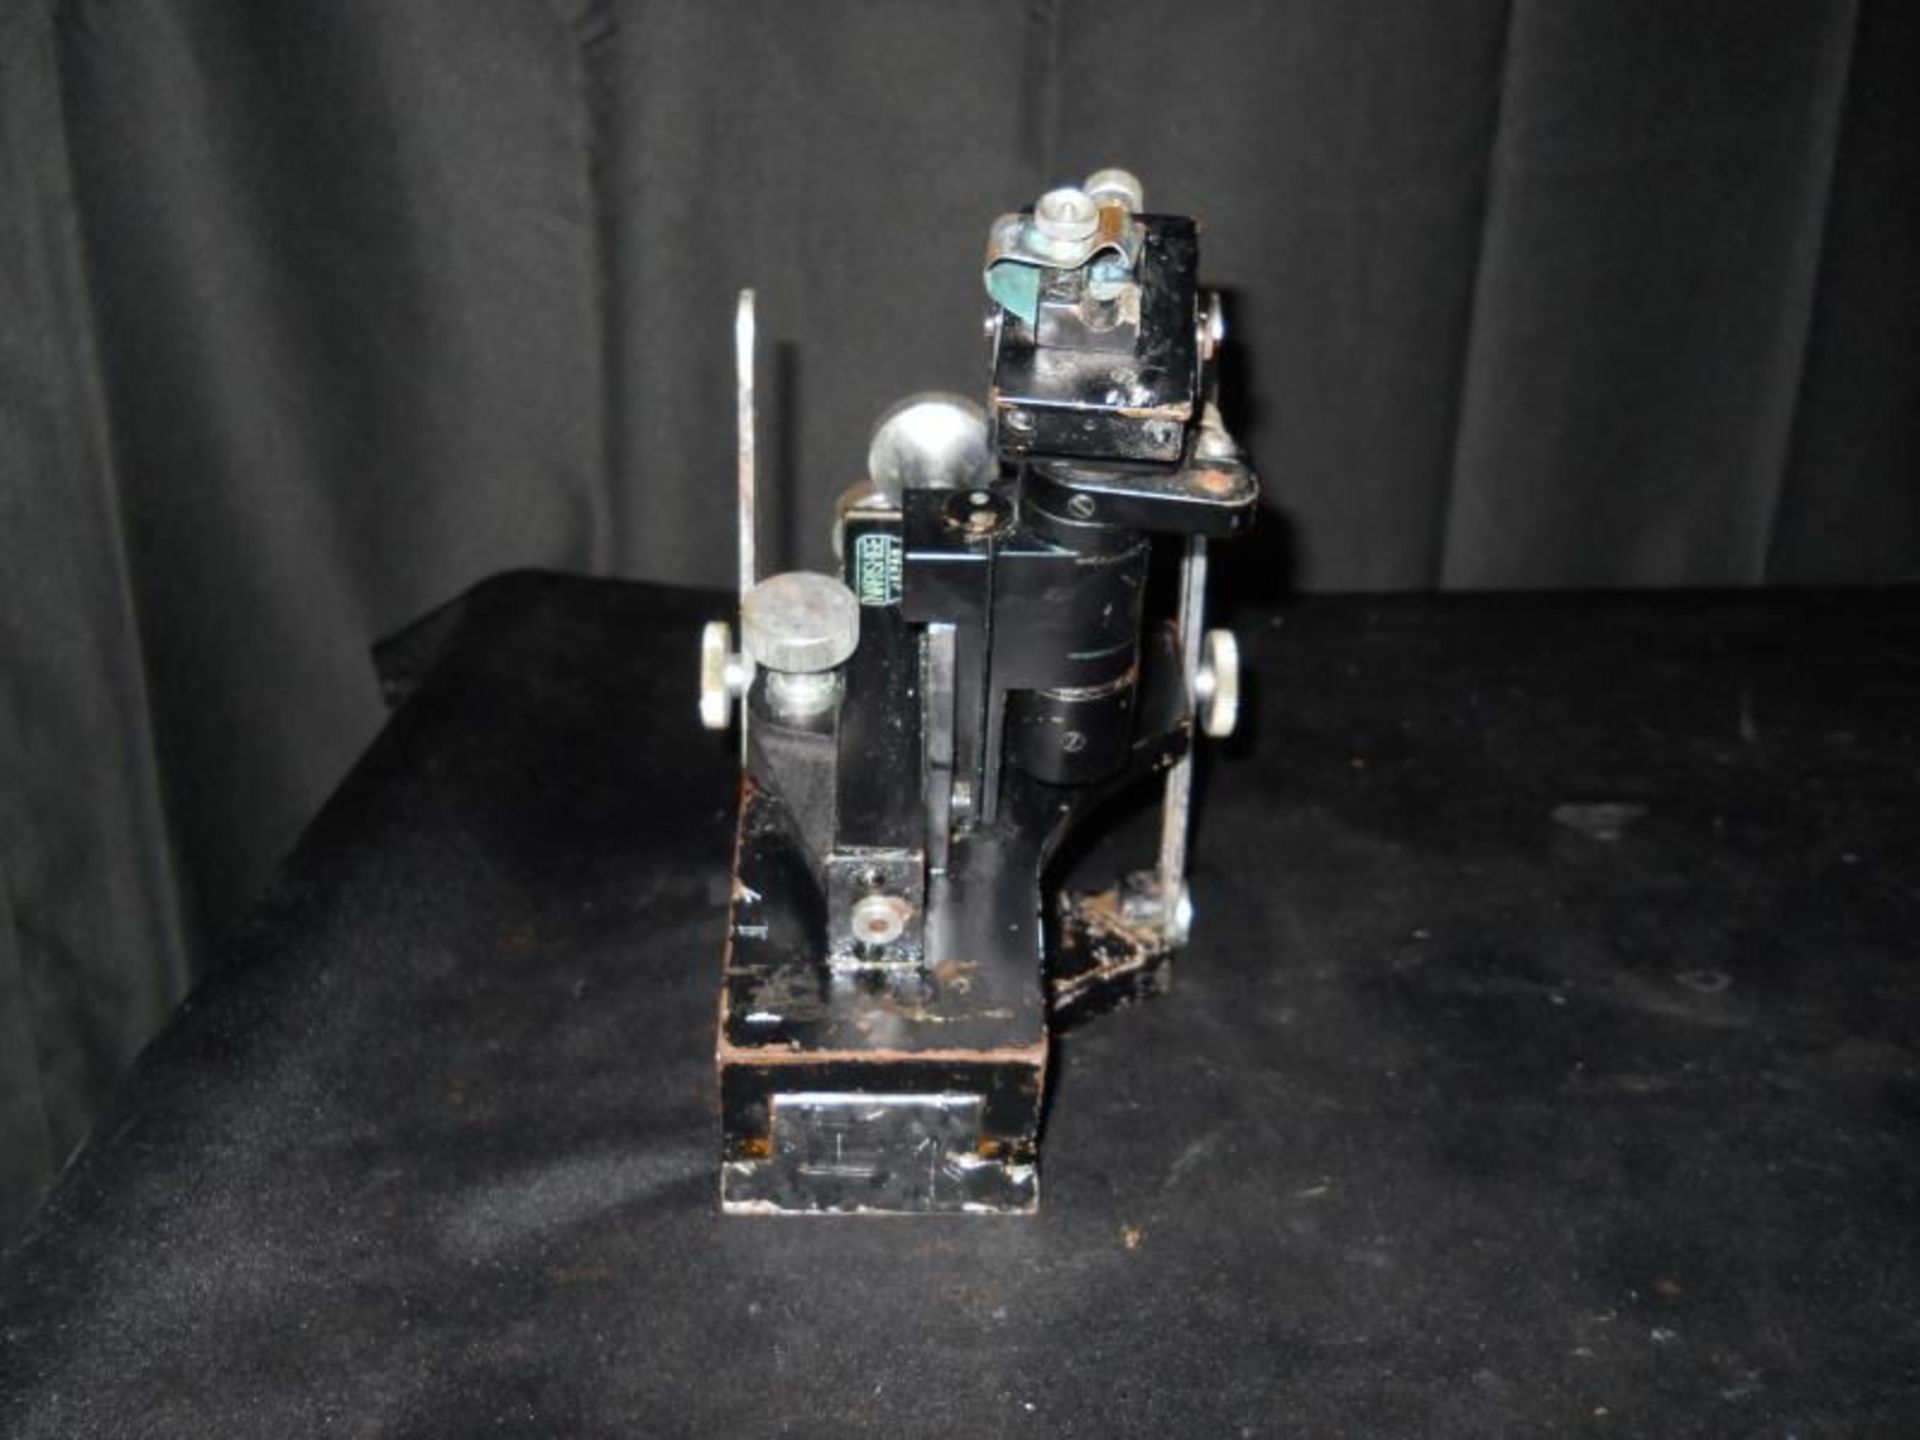 Lot of 6 Narishige Micro Manipulators (For Parts), Qty 1, 321981750676 - Image 20 of 25